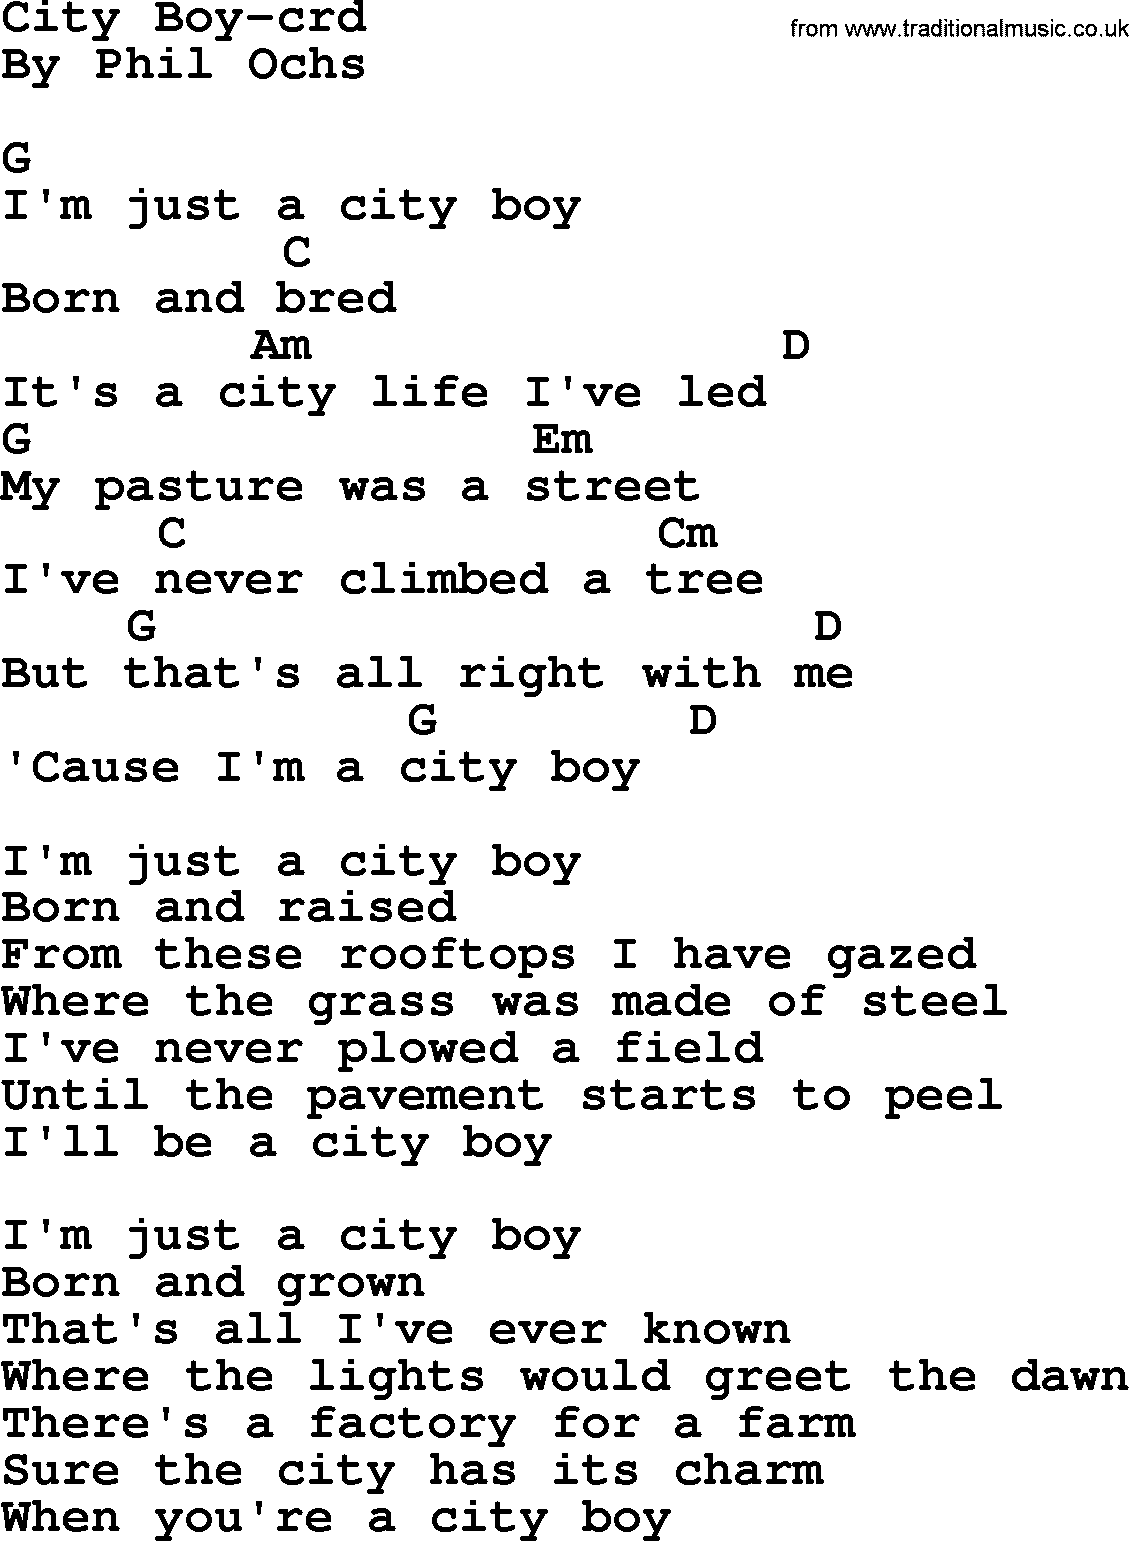 Phil Ochs song City Boy- by Phil Ochs, lyrics and chords